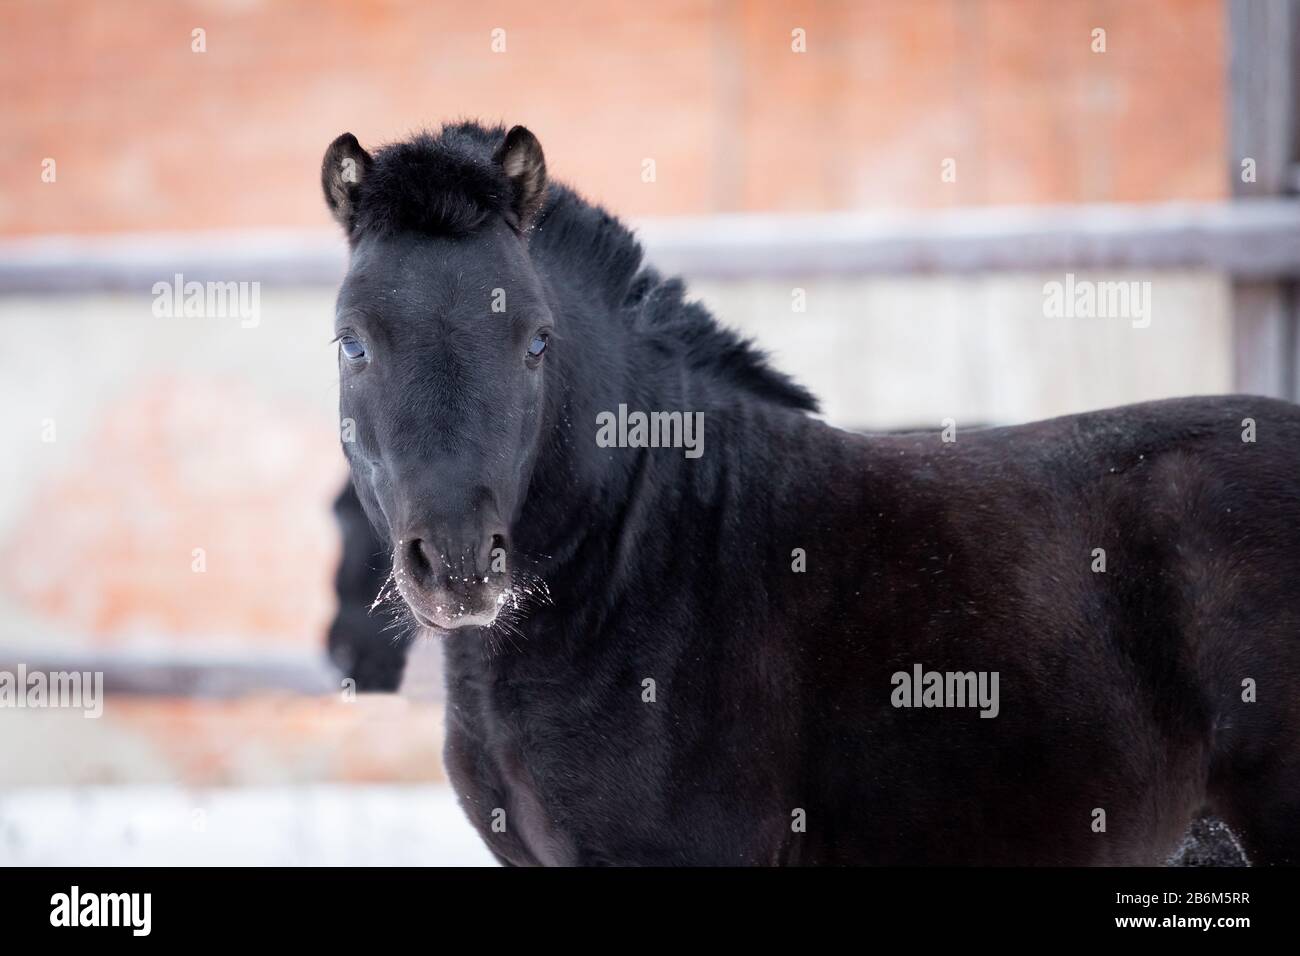 Black pony walks in manege at winter day Stock Photo